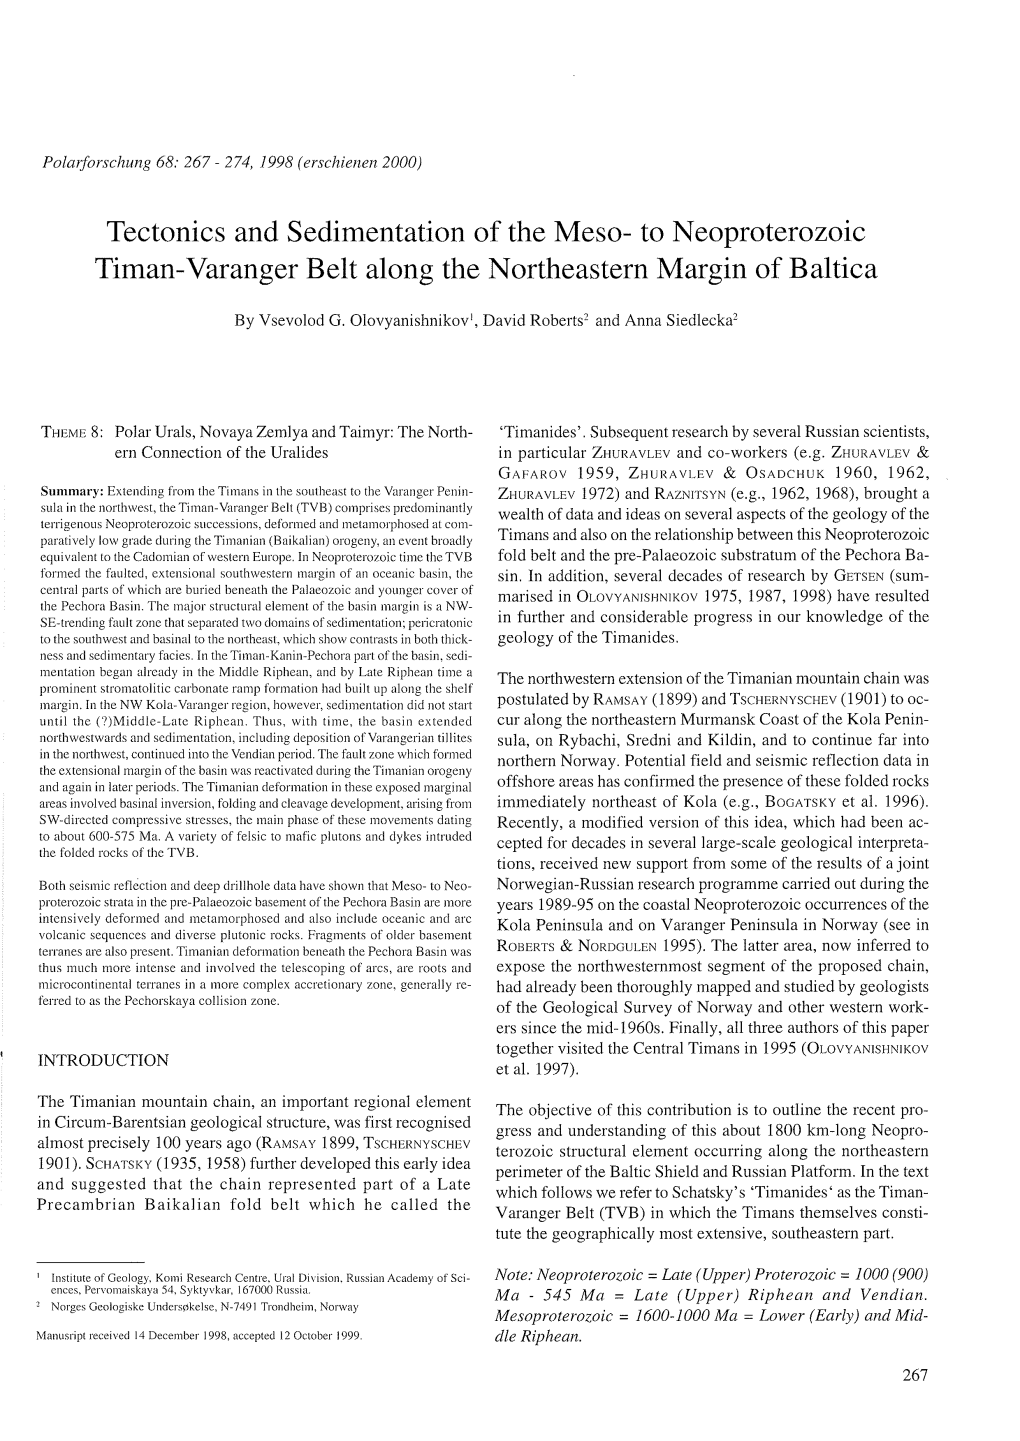 To Neoproterozoic Timan-Varanger Belt Along the Northeastern Margin of Baltica